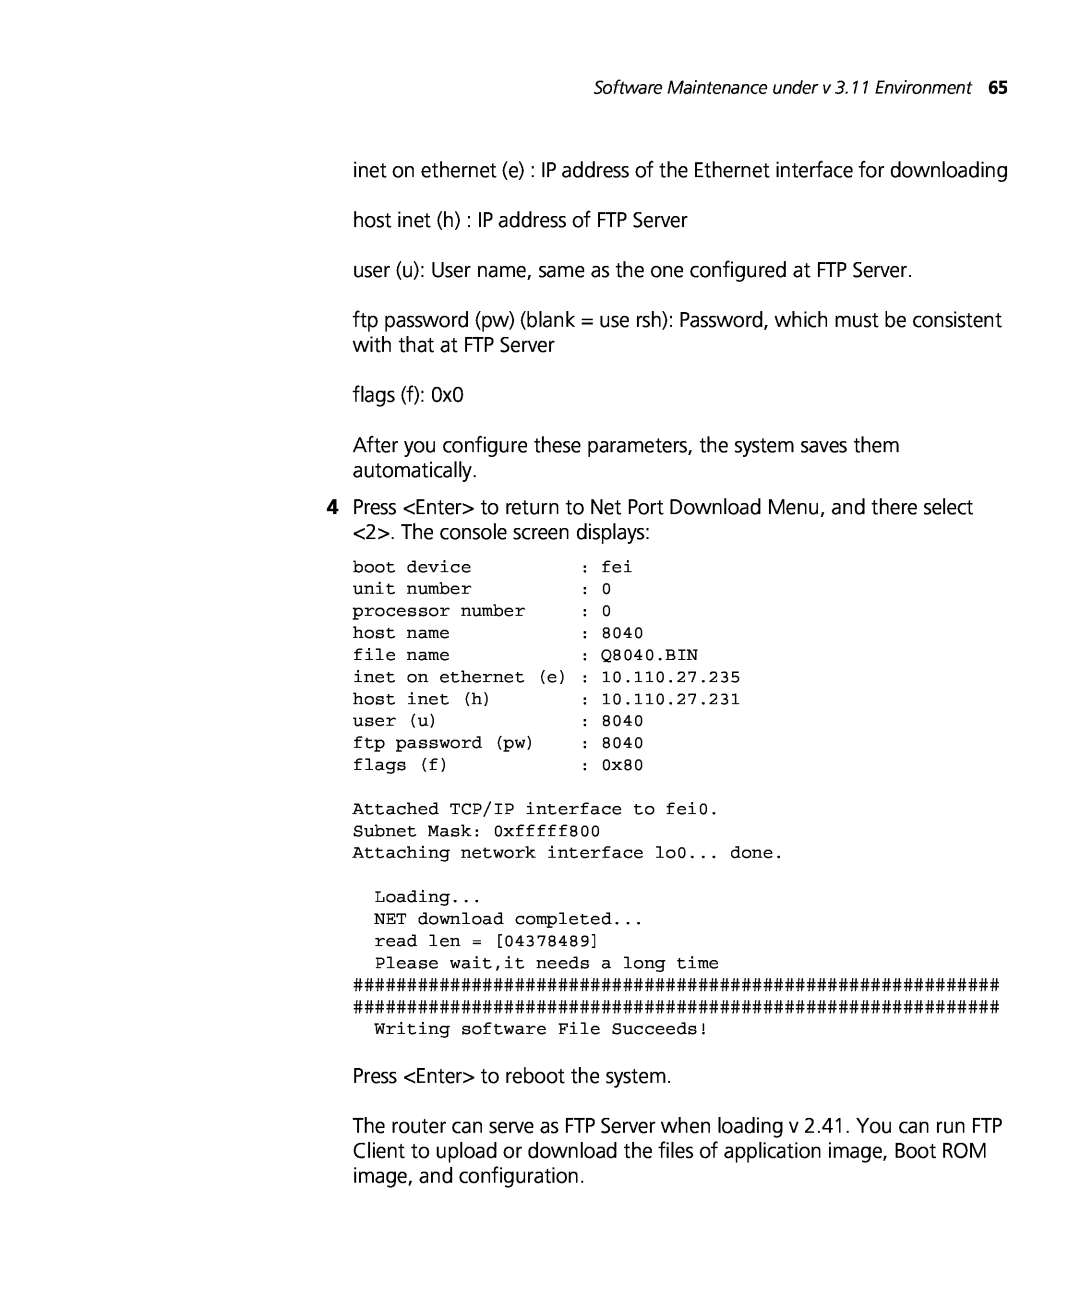 3Com 5000 manual host inet h IP address of FTP Server 